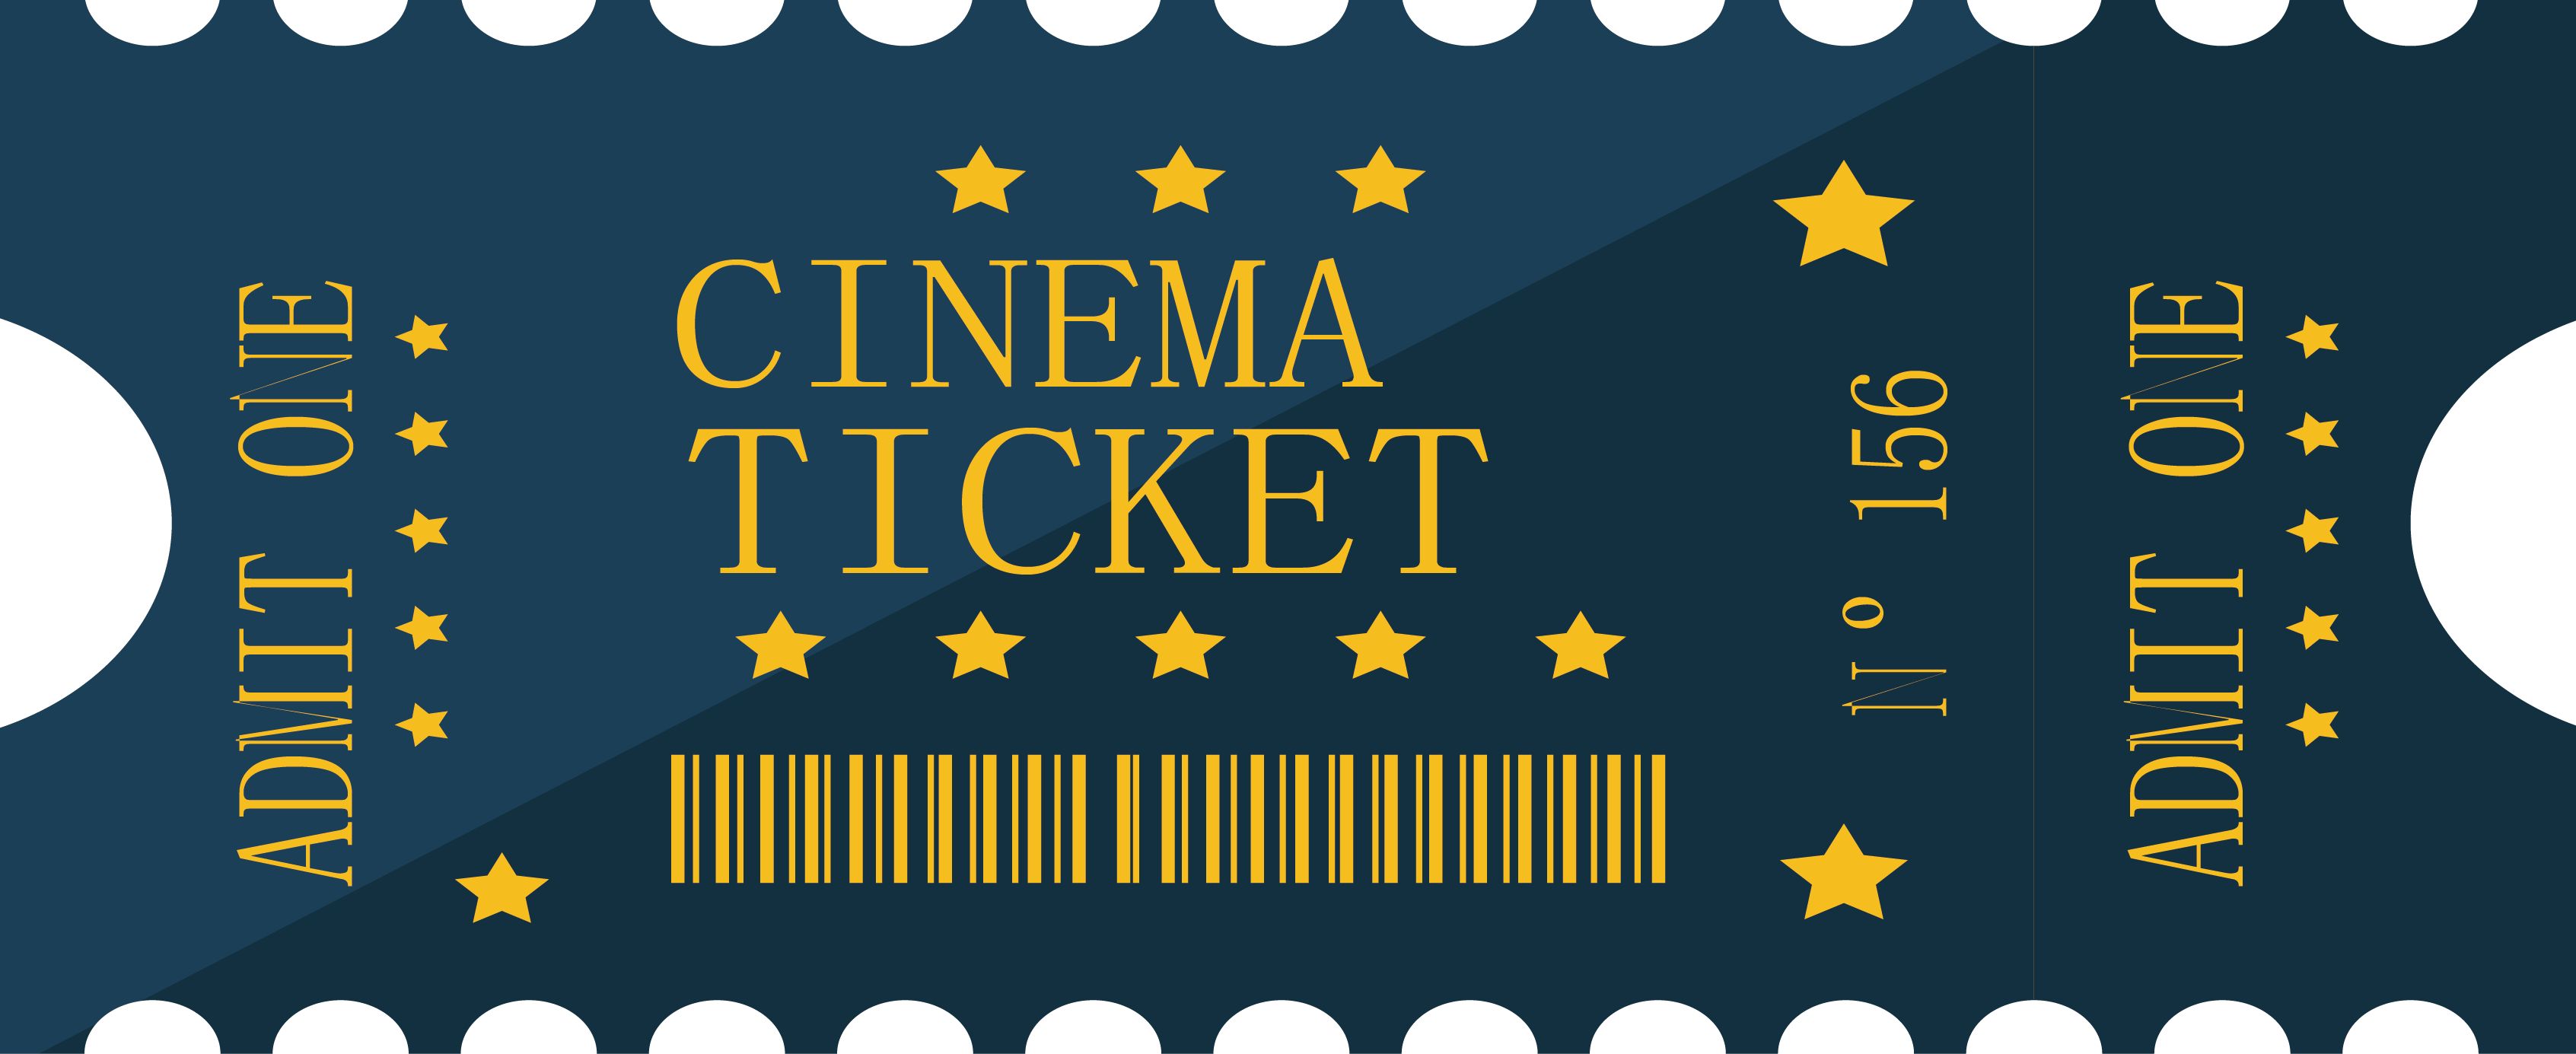 Ticket Cartoon Film Cinema - Cartoon movie ticket design png download -  3385*1385 - Free Transparent Ticket png Download. - Clip Art Library